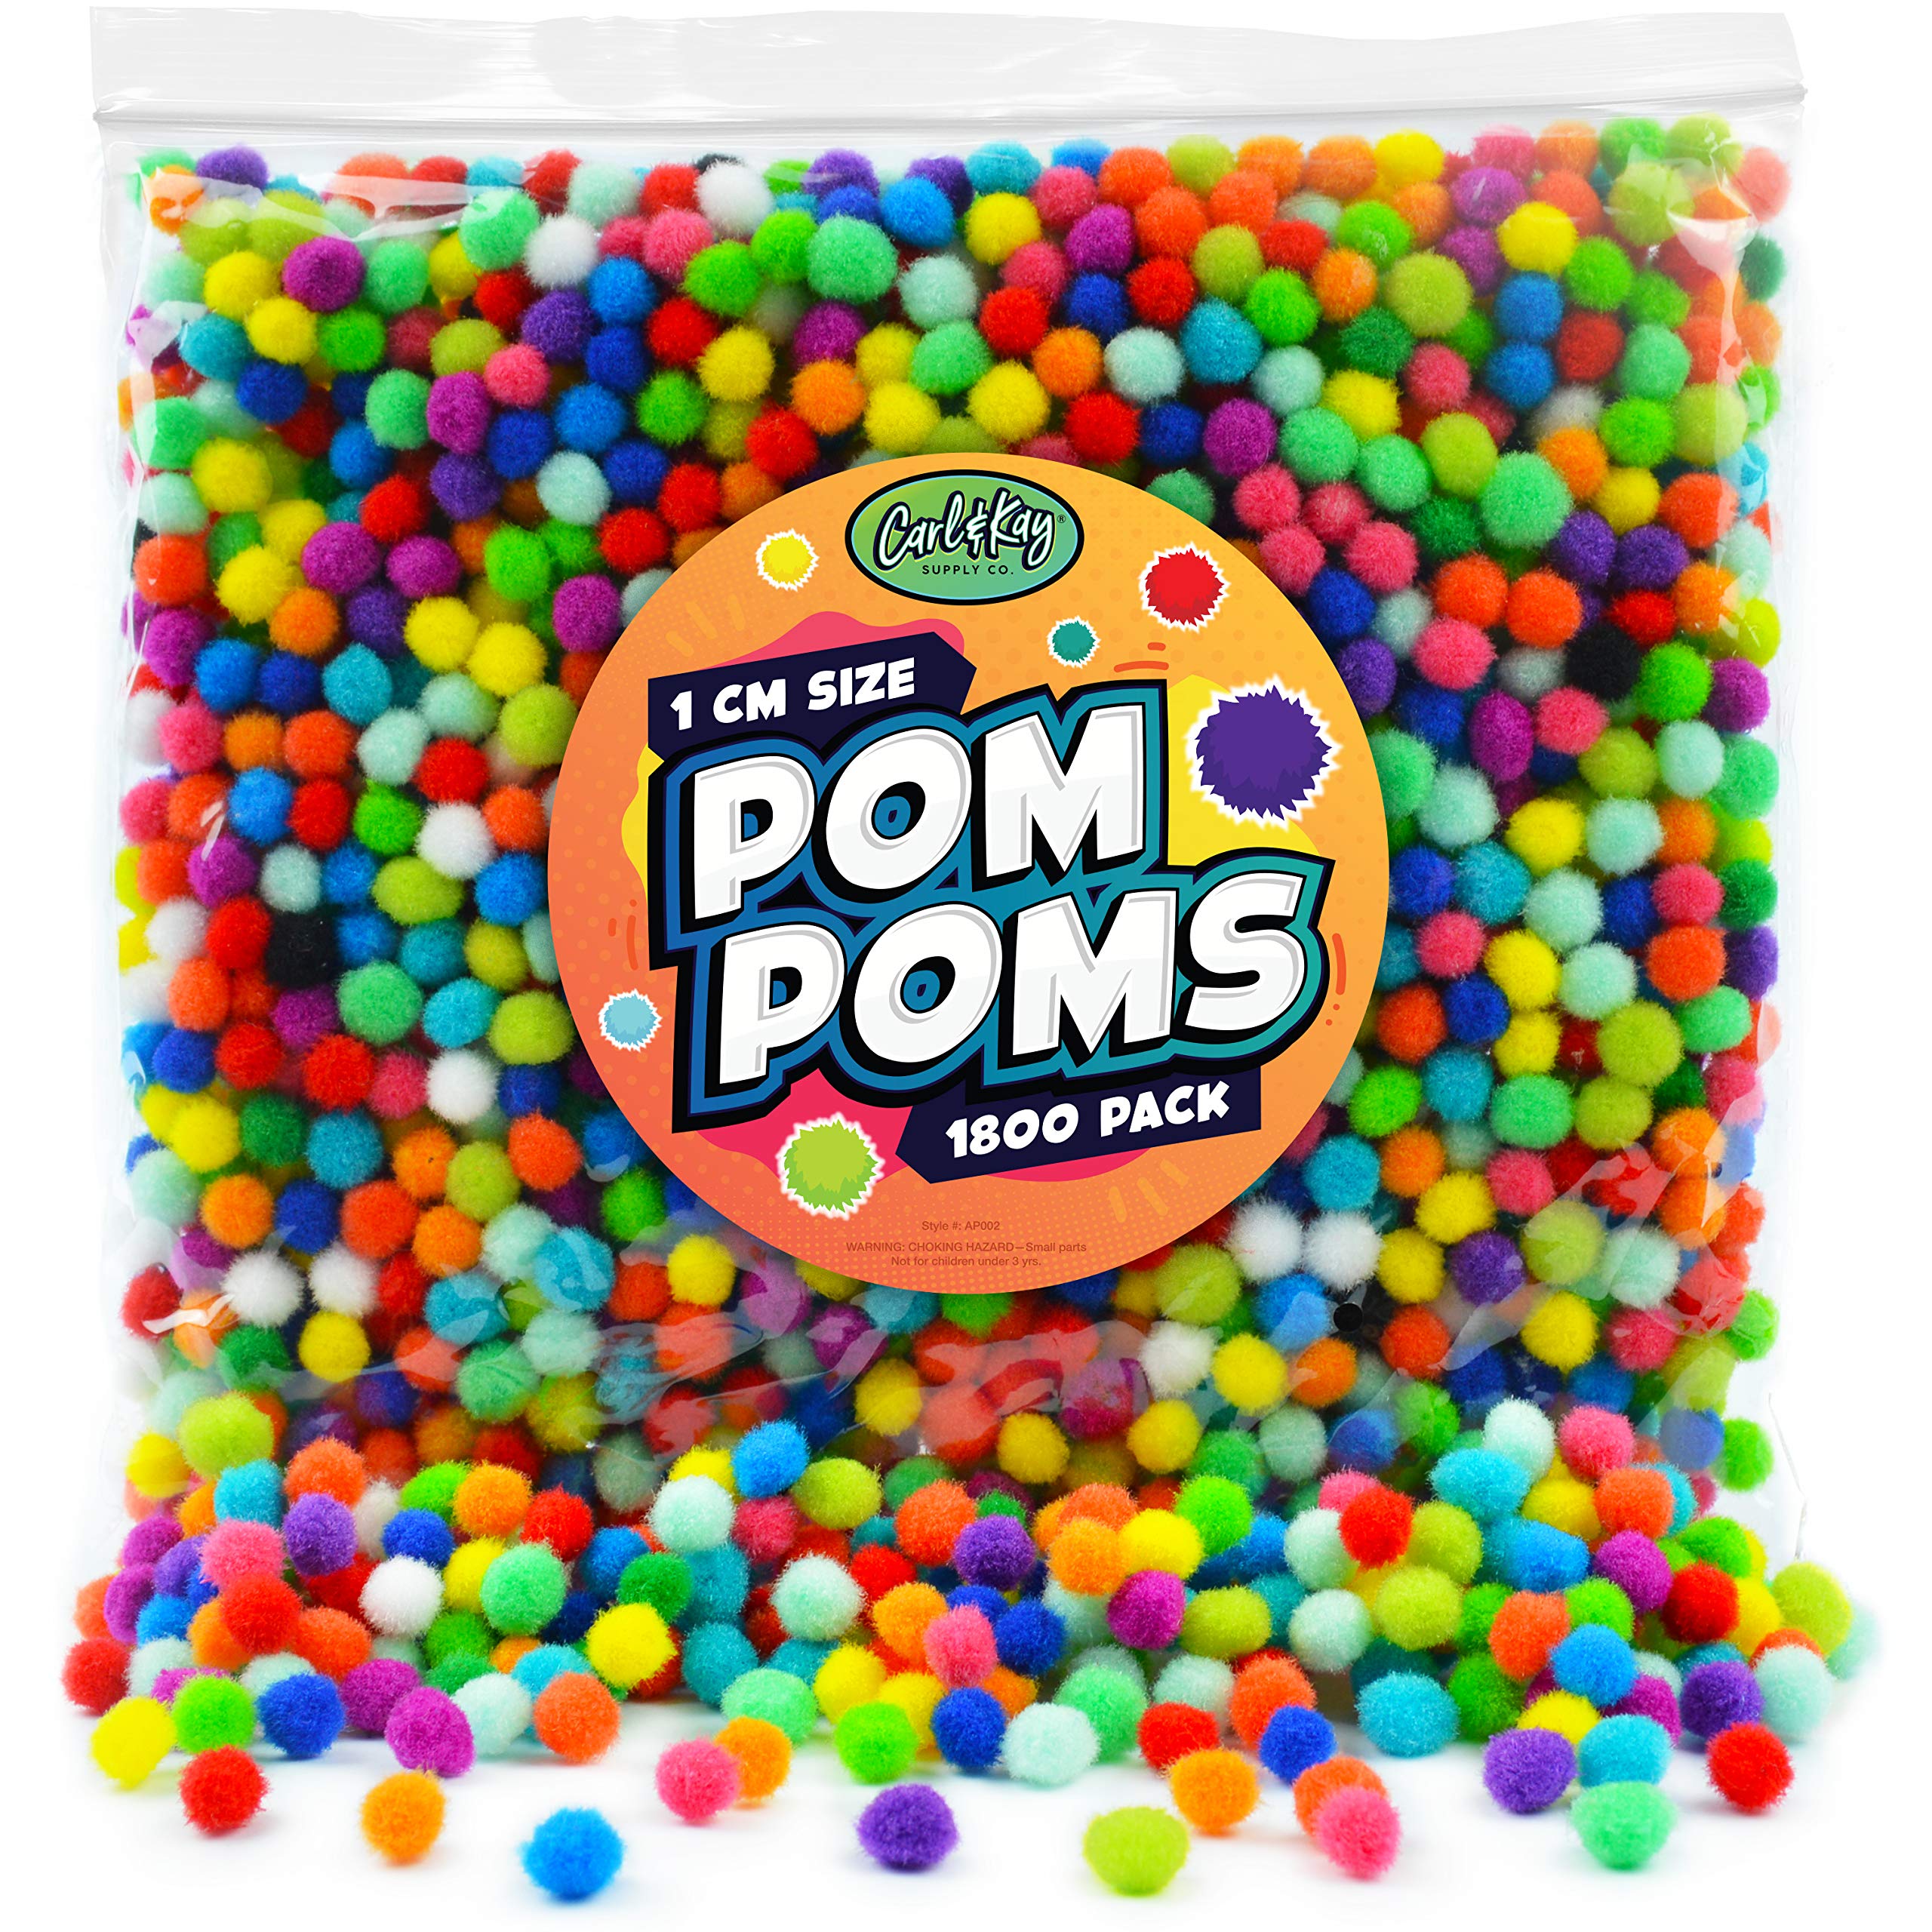 1800 Pieces - Small Pom Poms Balls for Craft Supplies - Assorted